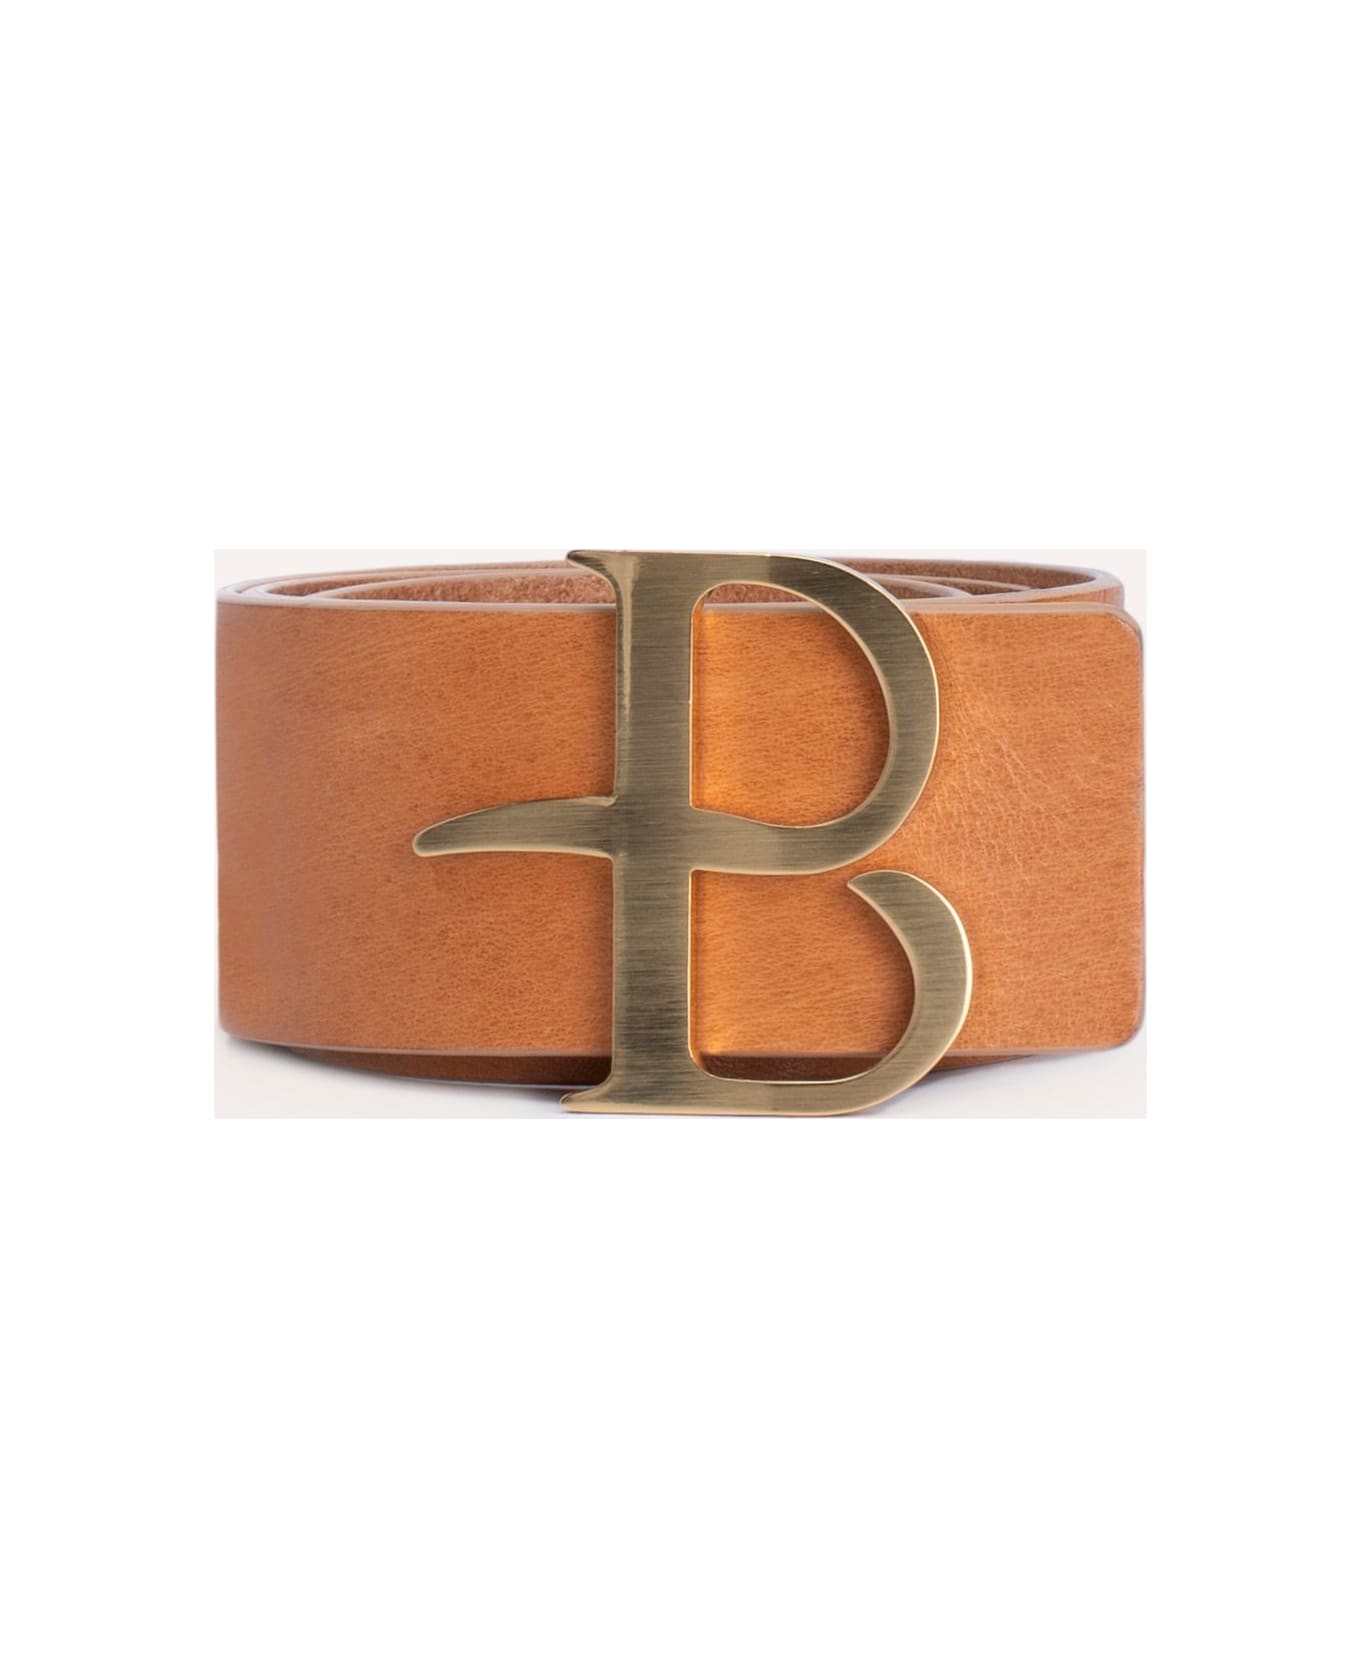 Ballantyne High Leather Belt - Cream